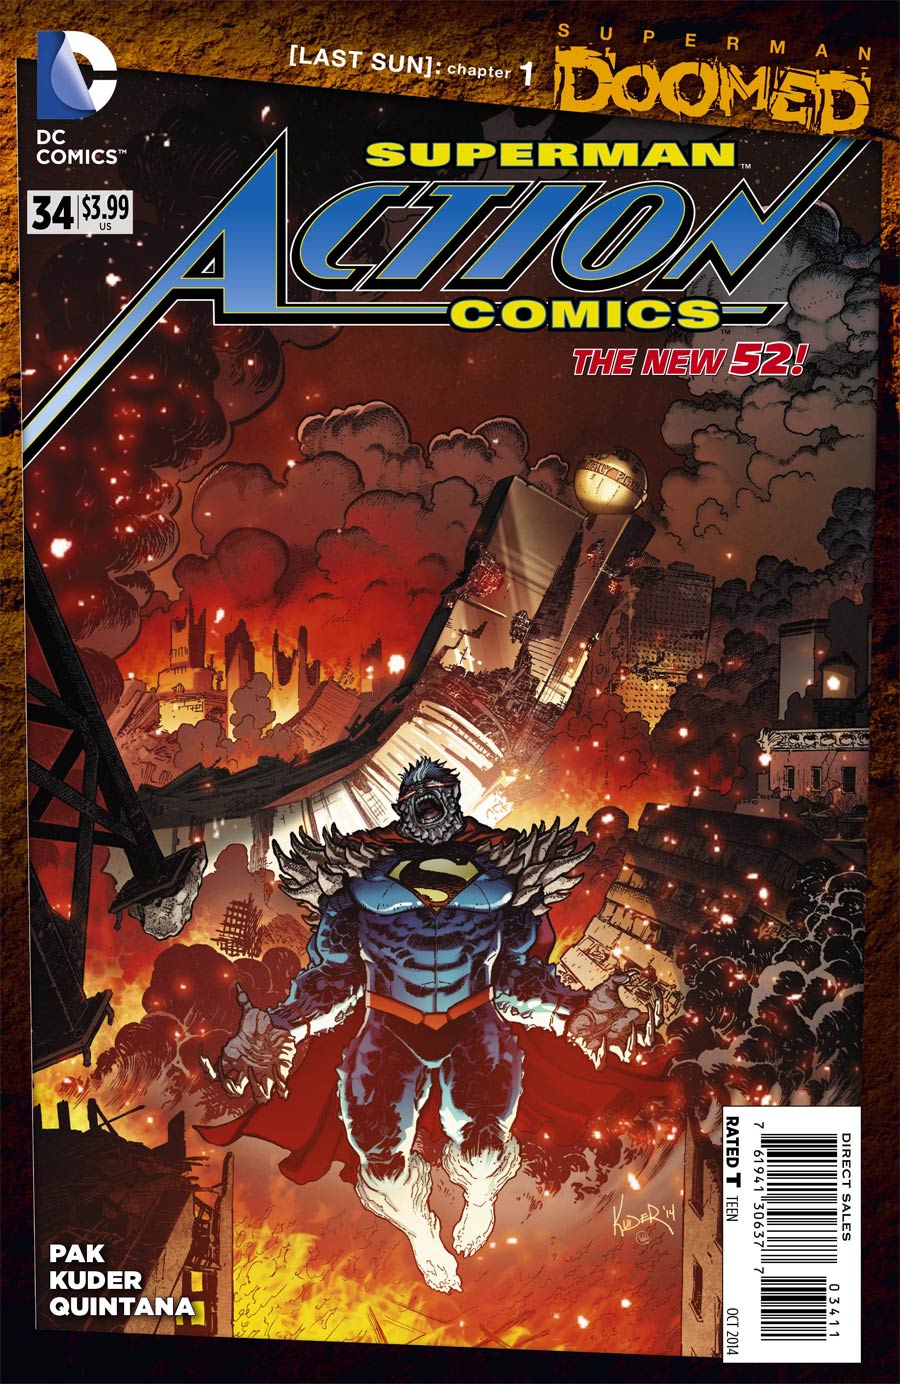 Action Comics Vol 2 #34 Cover A Regular Aaron Kuder Cover (Superman Doomed Tie-In)